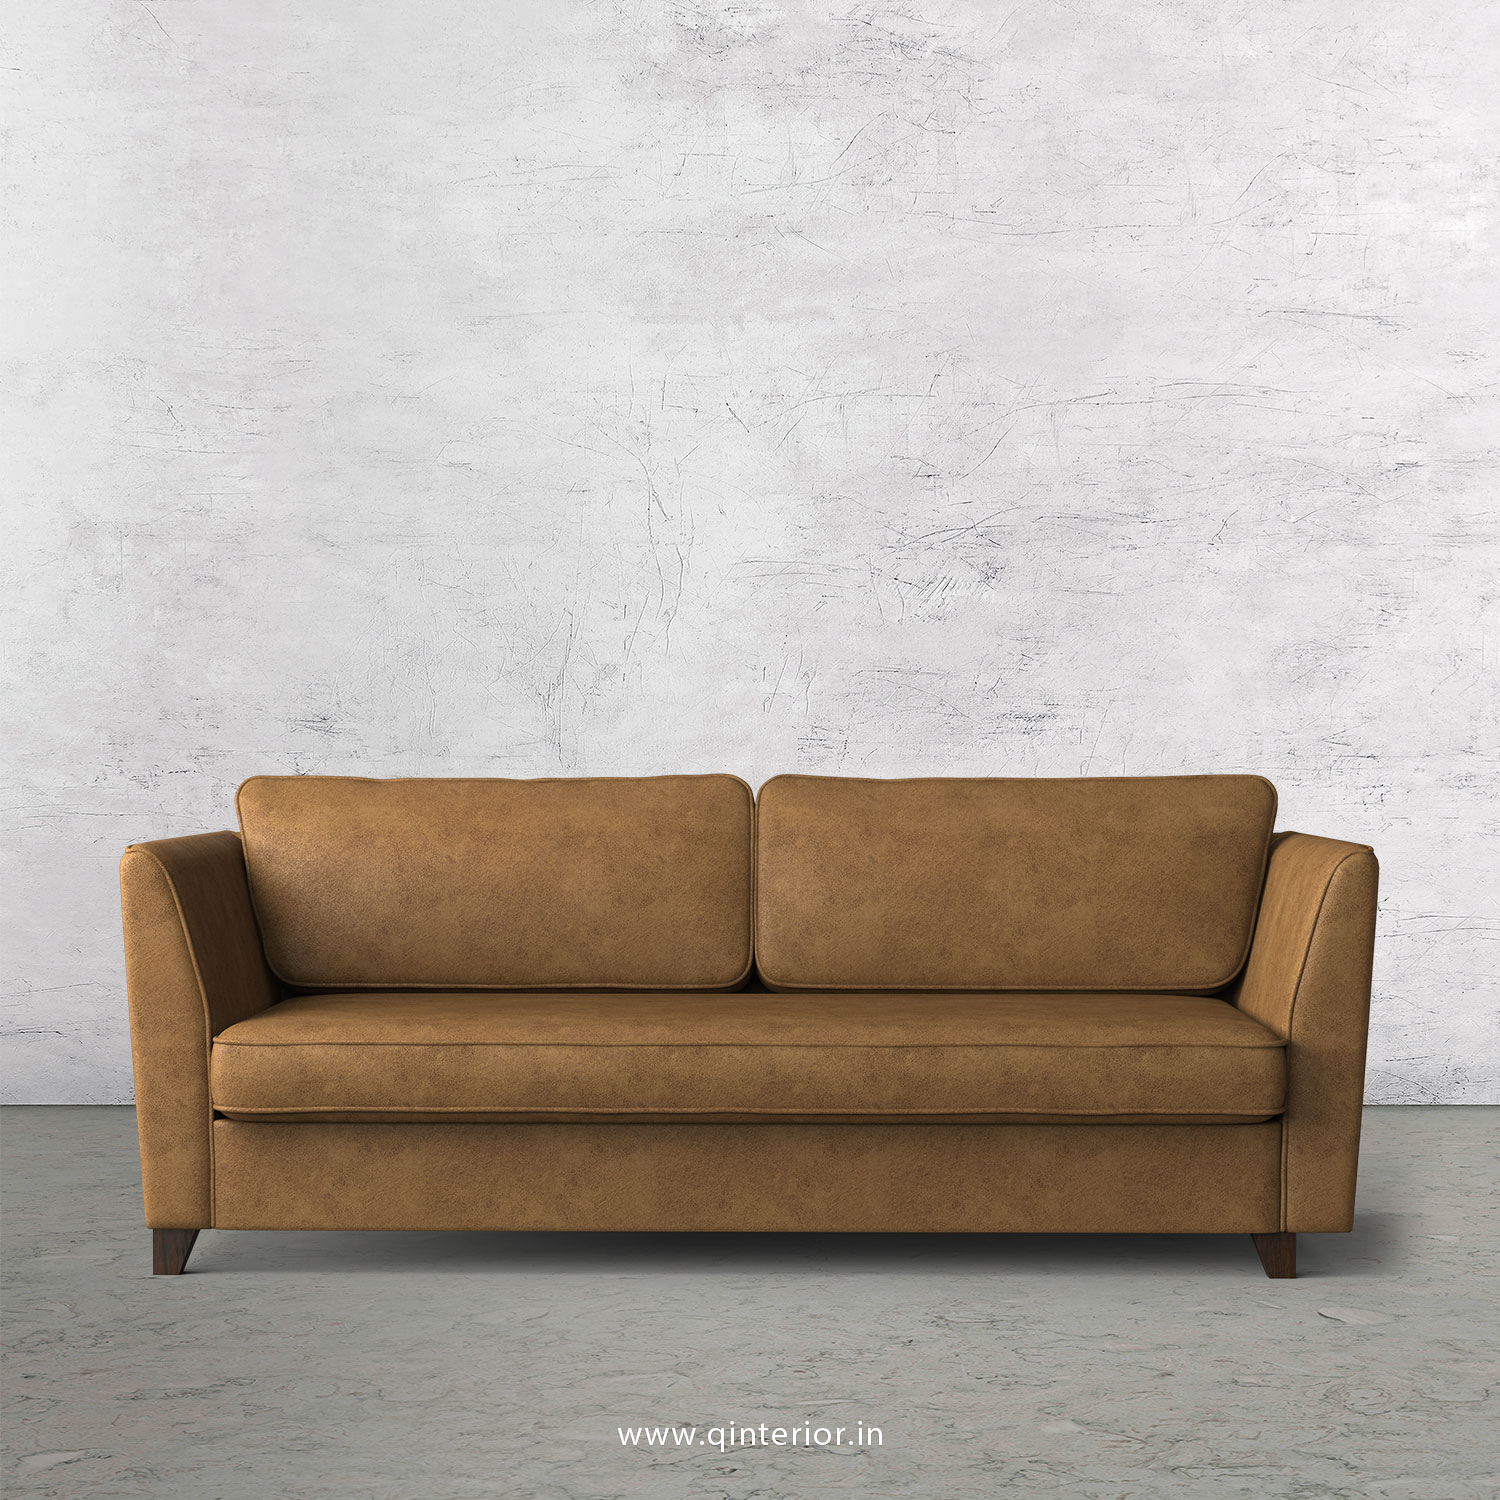 KINGSTONE 3 Seater Sofa in Fab Leather Fabric - SFA004 FL02